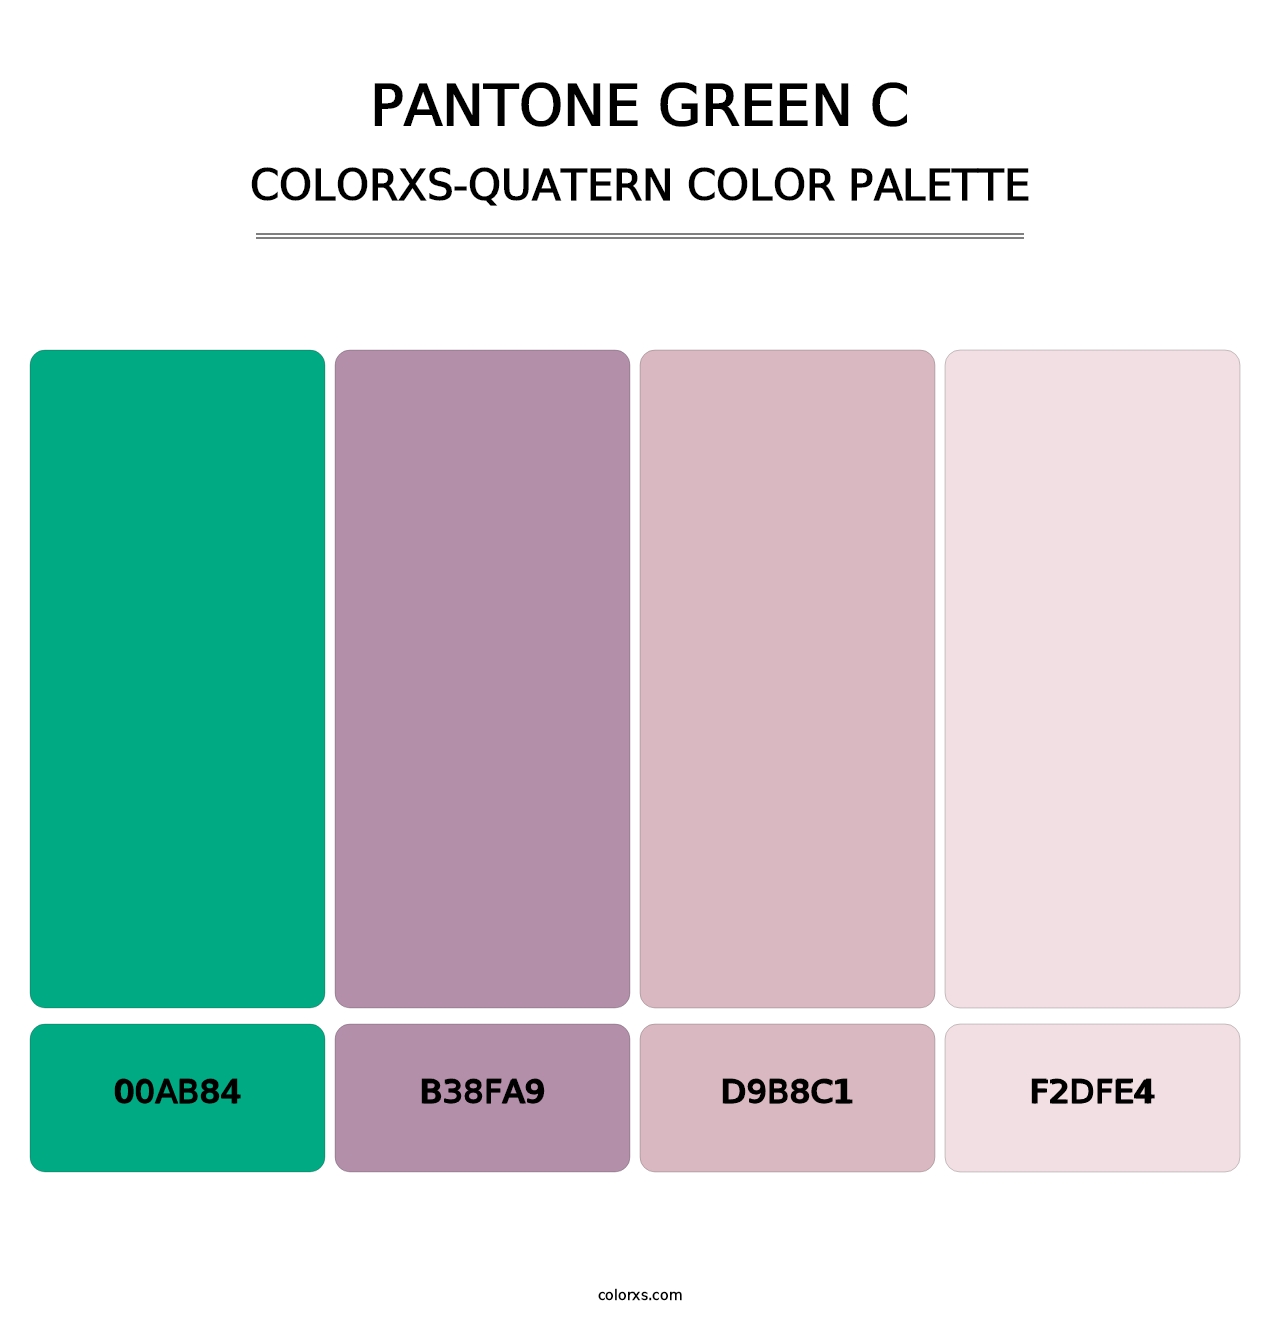 PANTONE Green C - Colorxs Quatern Palette